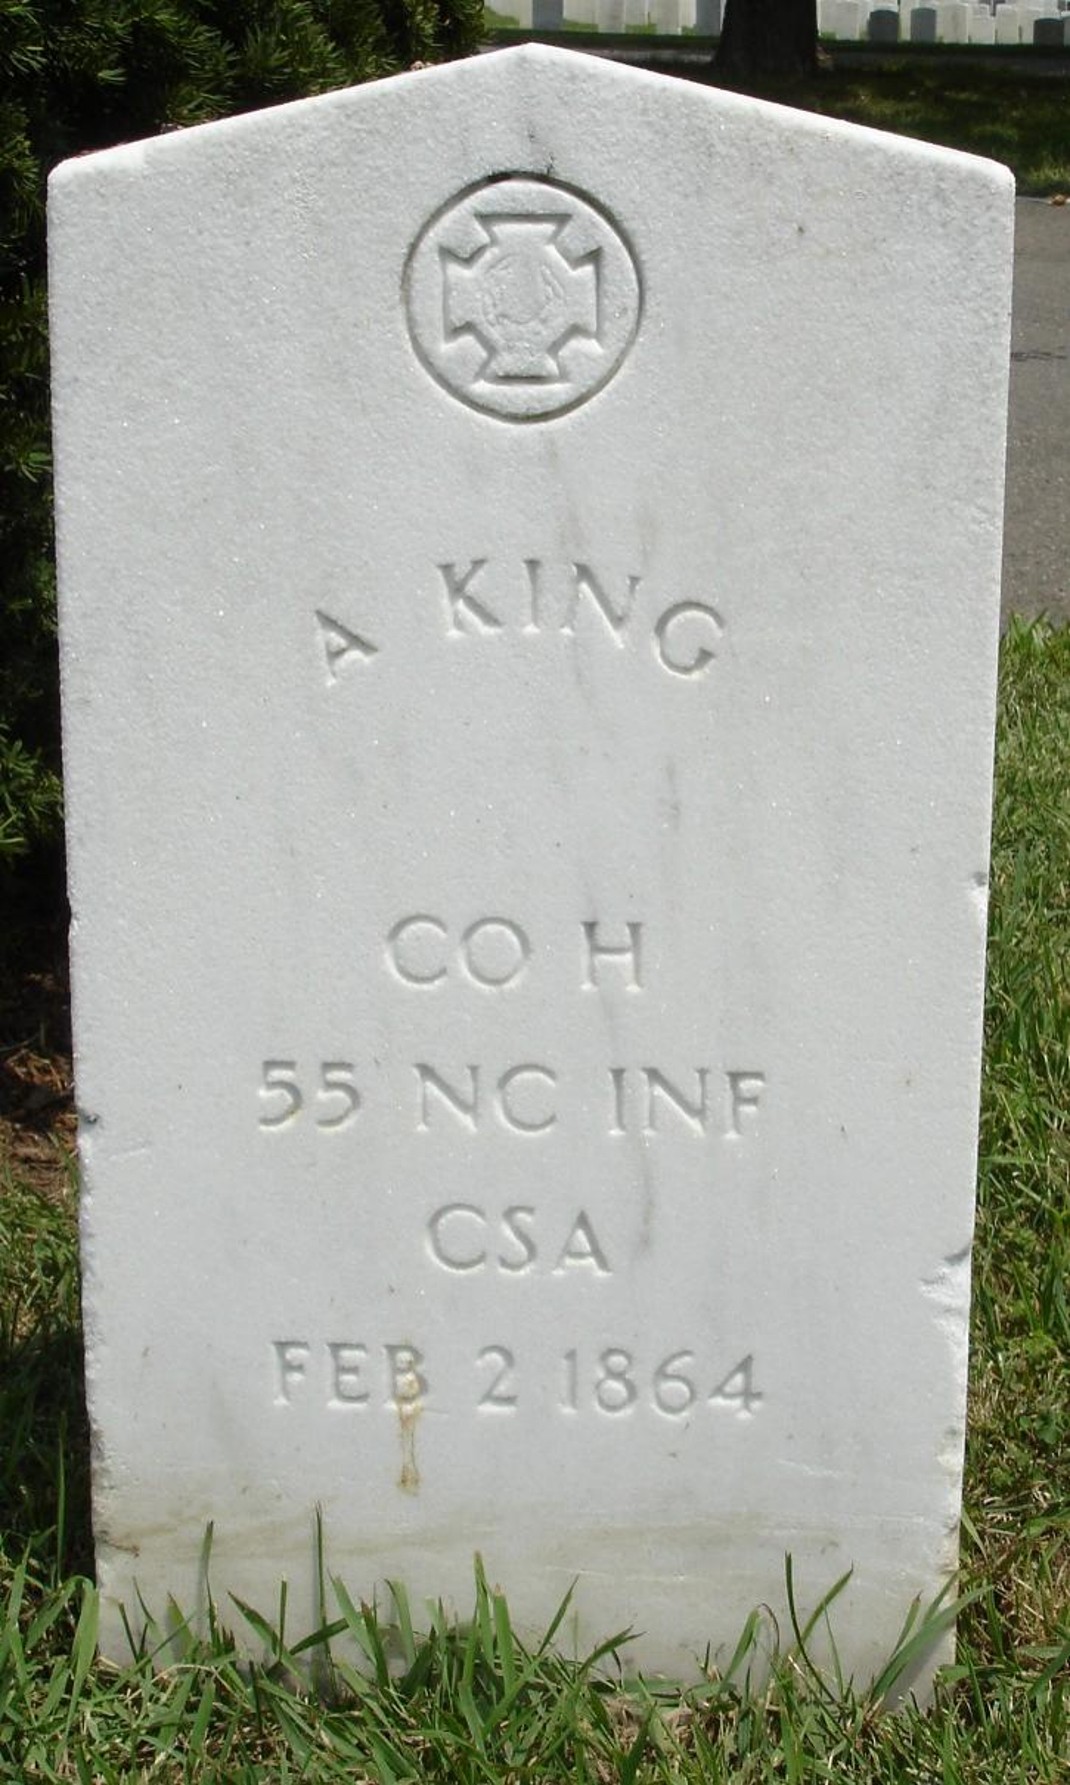 a-king-gravesite-photo-july-2006-002